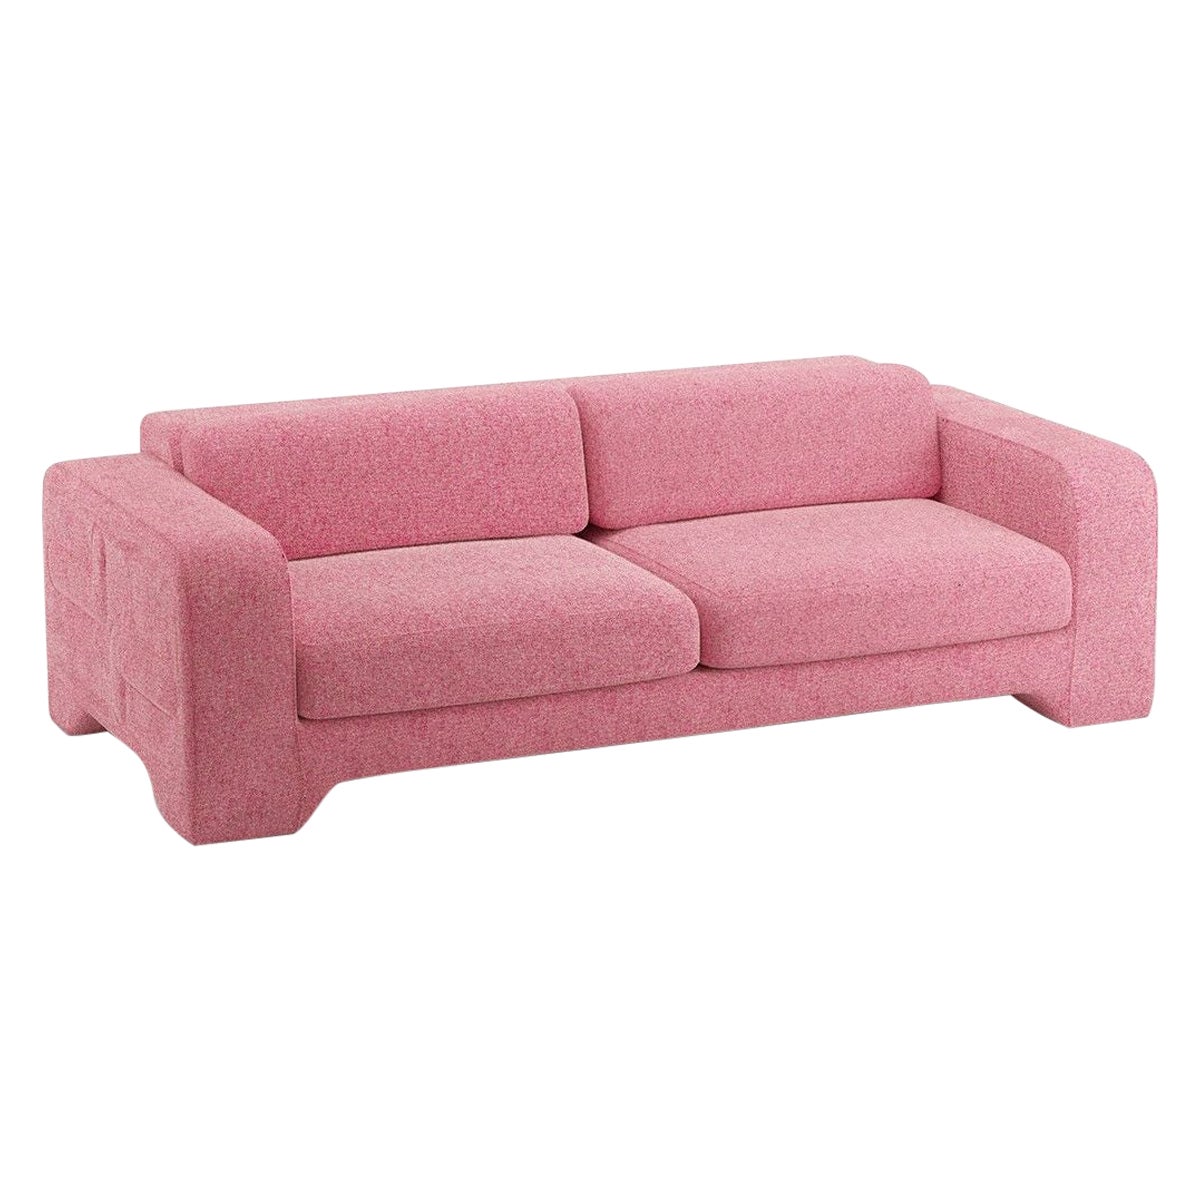 Popus Editions Giovanna 3 Seater Sofa in Fuschia London Linen Fabric